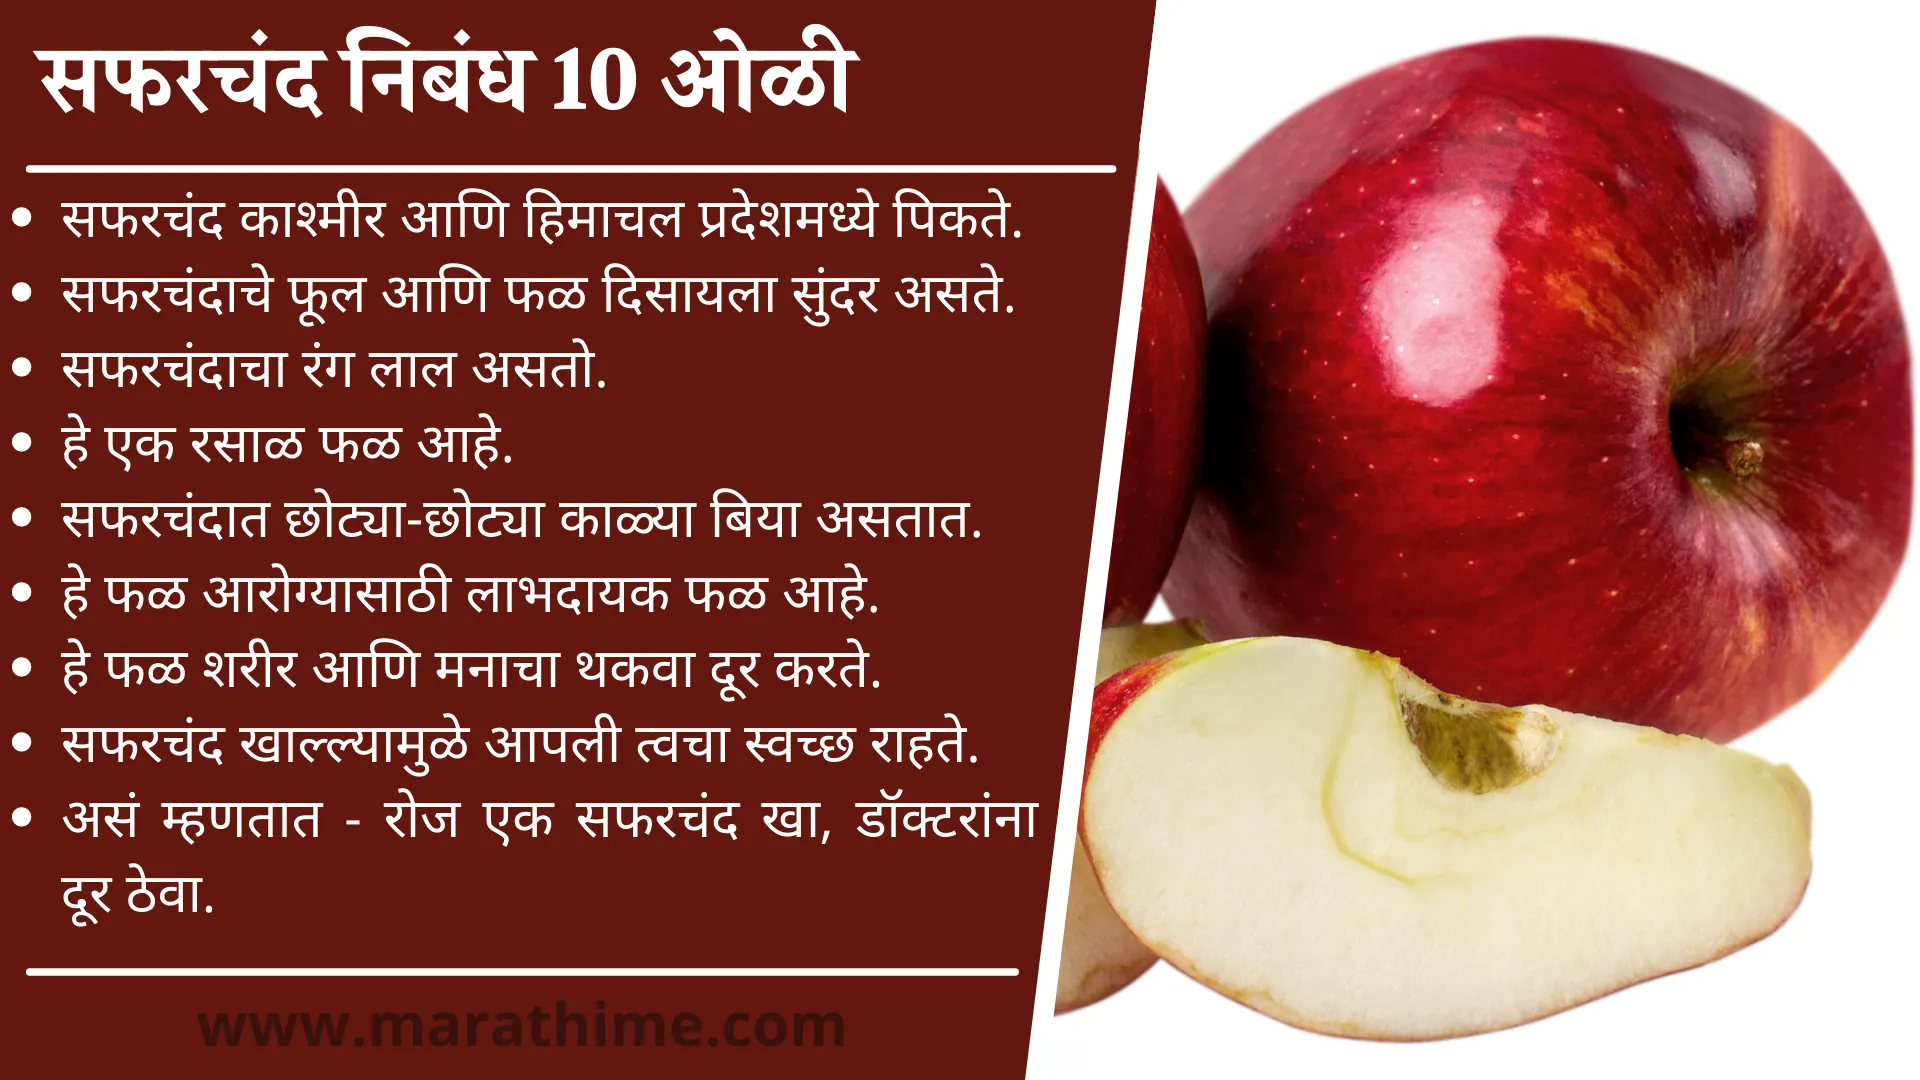 सफरचंद निबंध 10 ओळी-10 Lines on Apple in Marathi